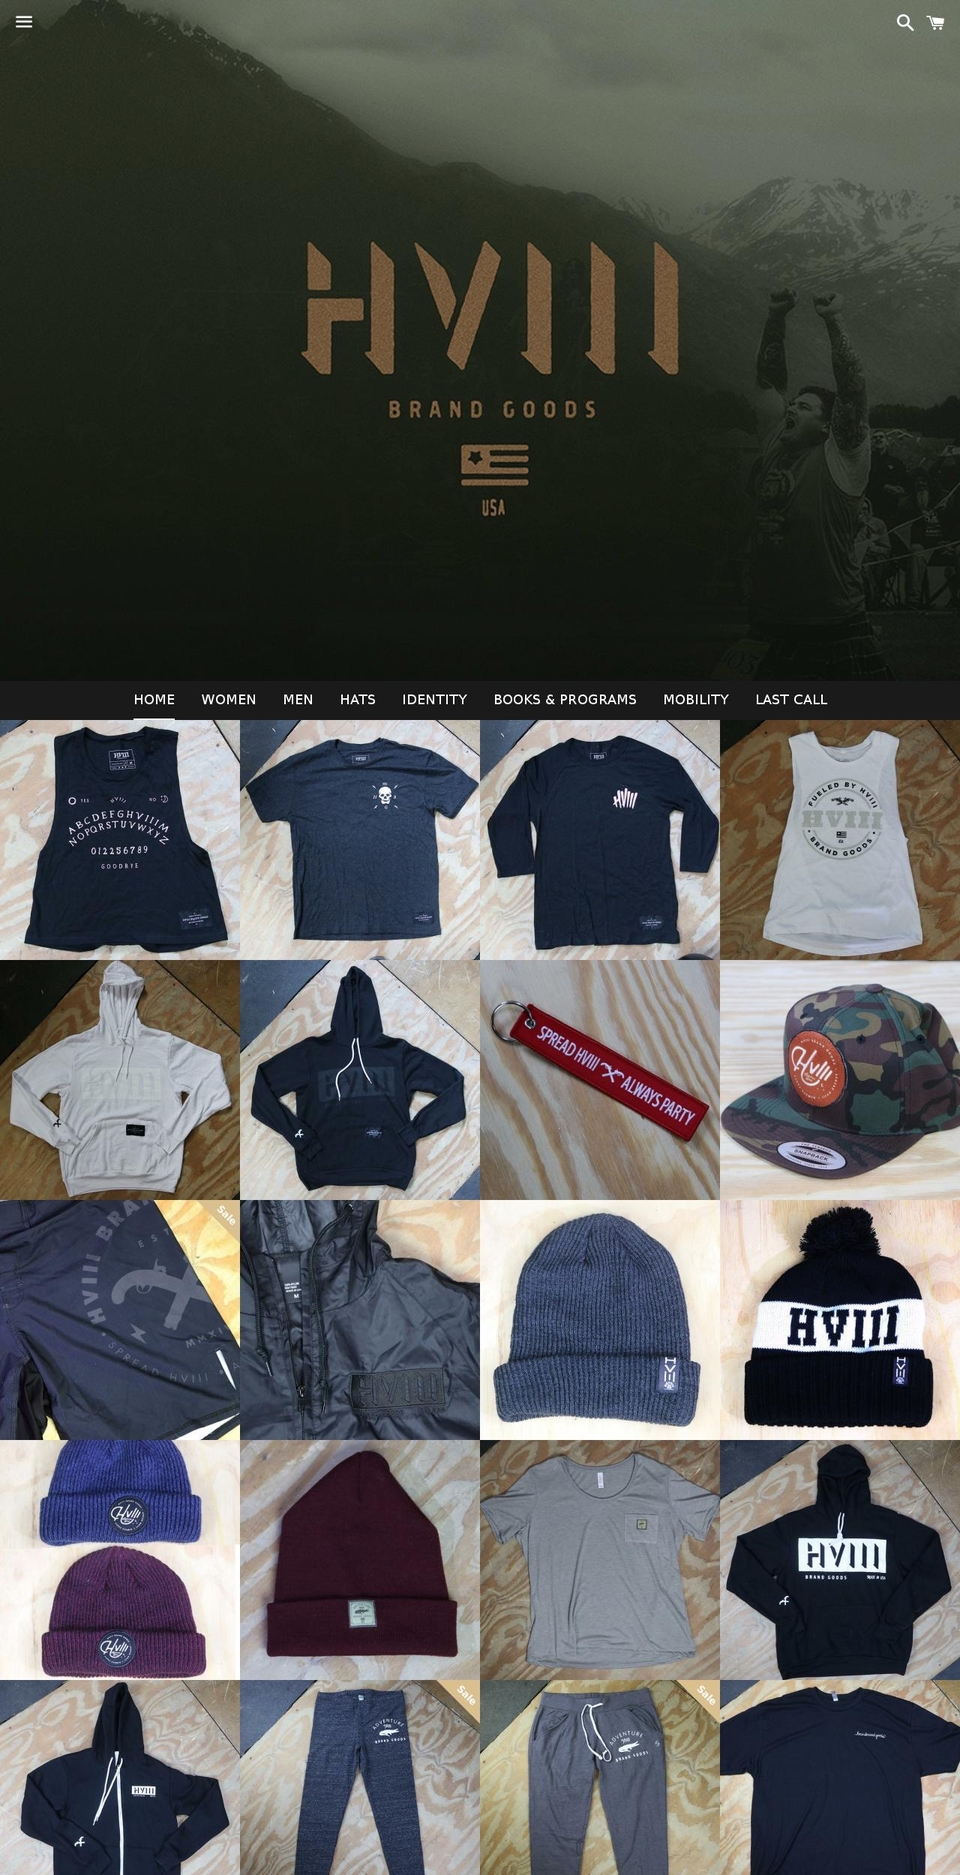 hviii-brand-goods.myshopify.com shopify website screenshot